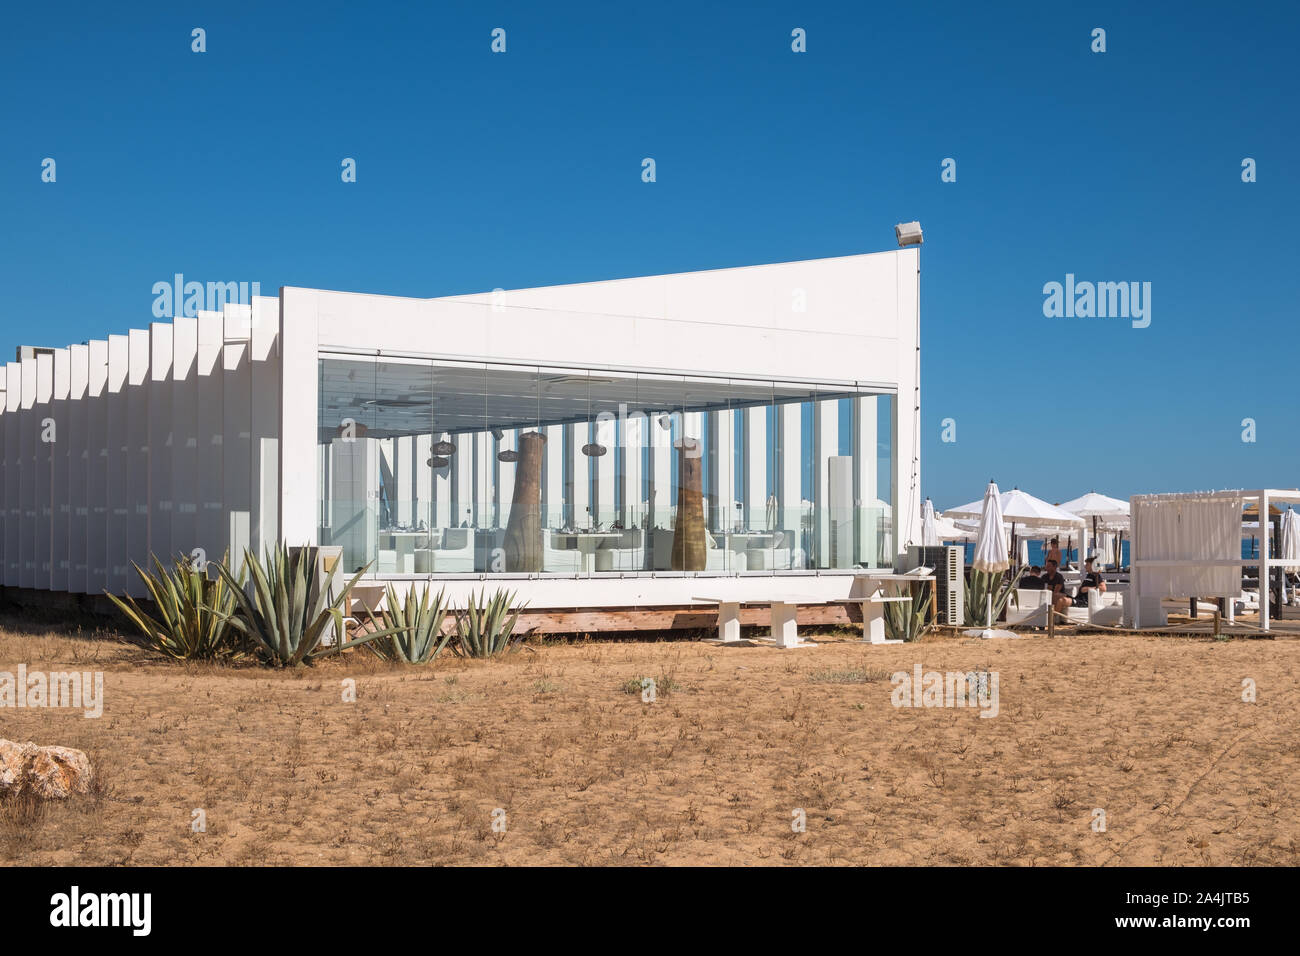 Beach Club on the beach at Vilamoura in the Algarve, Portugal Stock Photo